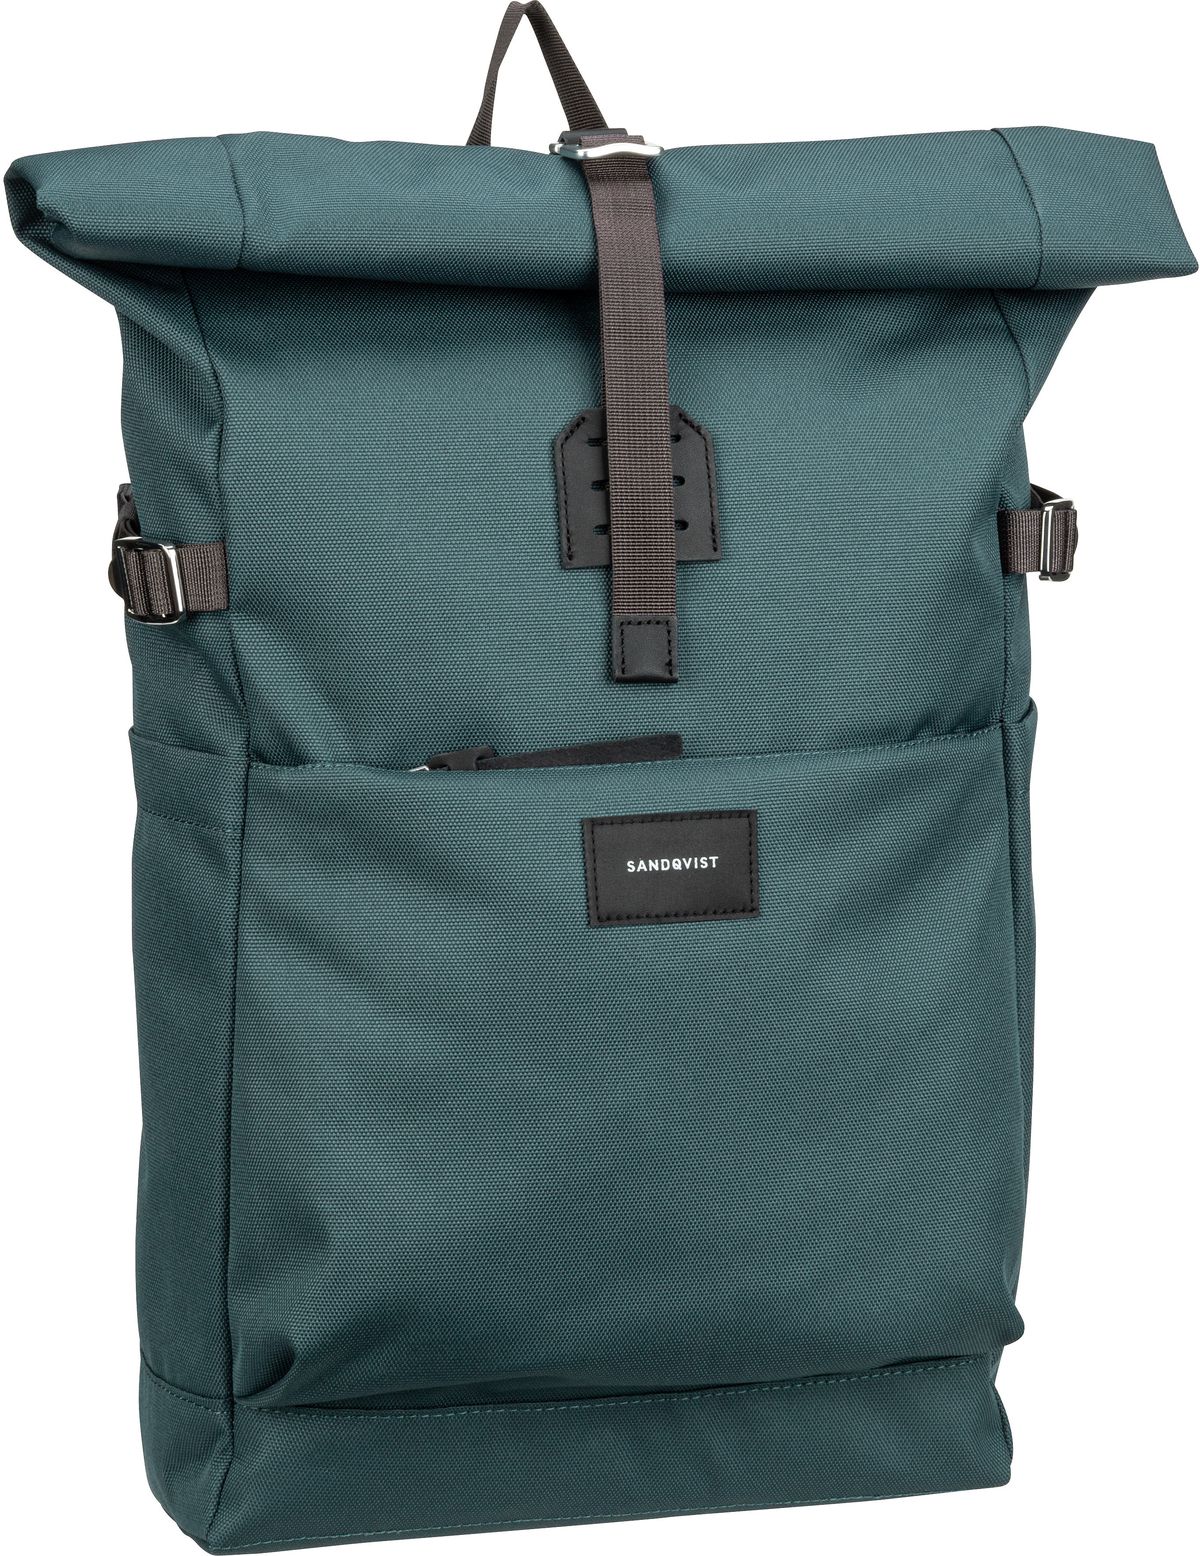 Sandqvist Ilon Rolltop Backpack  in Blau (11.5 Liter), Rucksack / Backpack